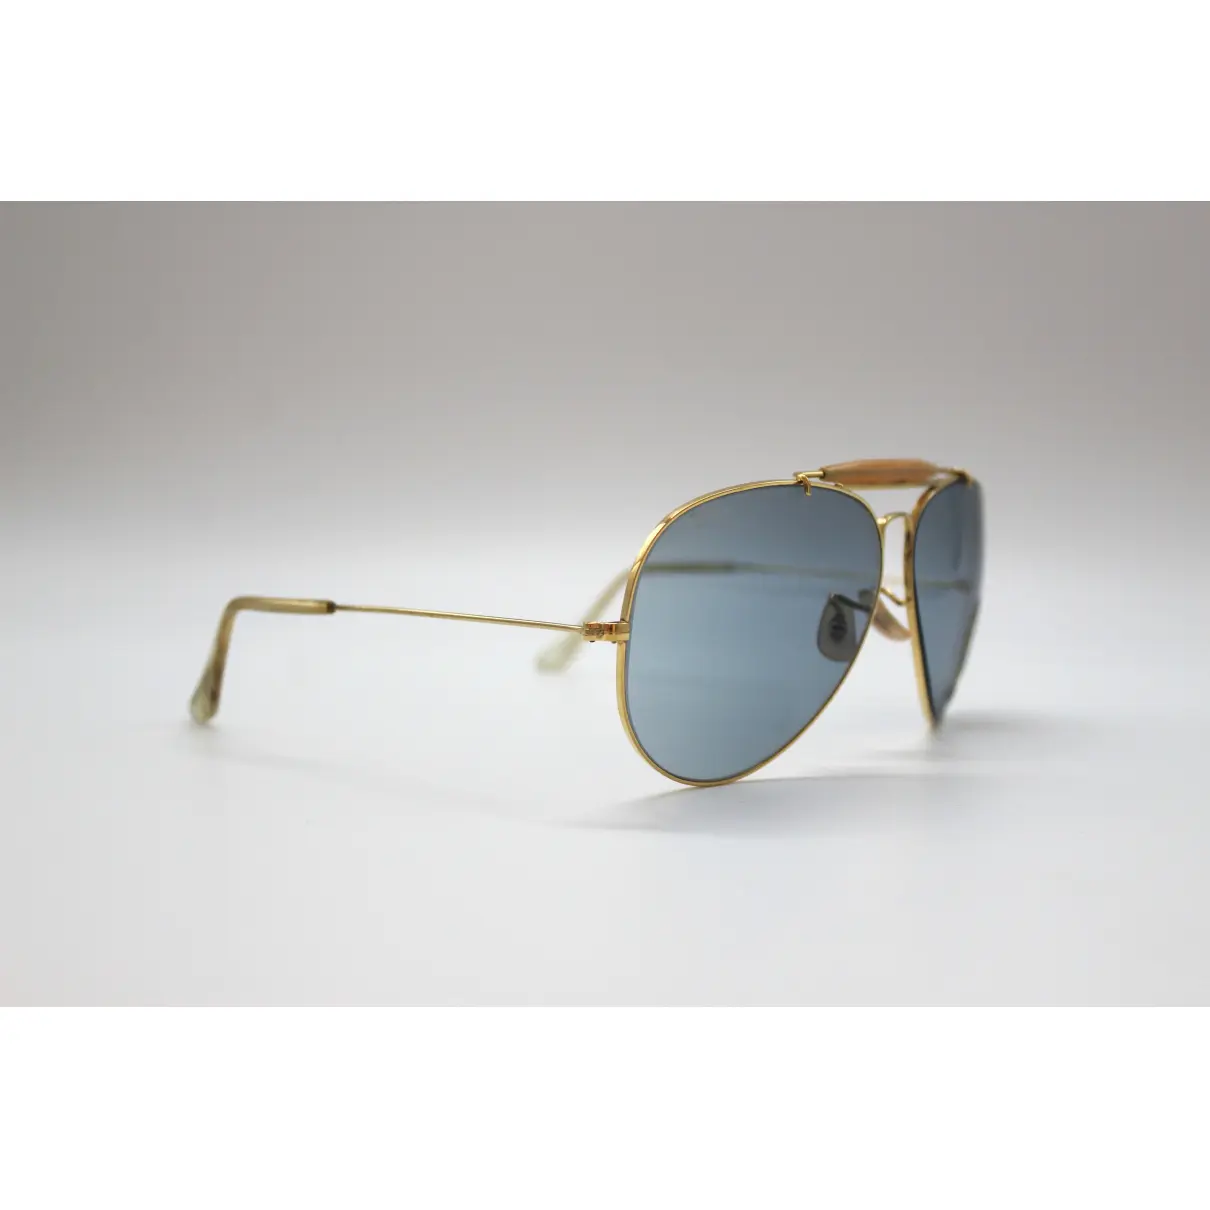 Aviator sunglasses Ray-Ban - Vintage